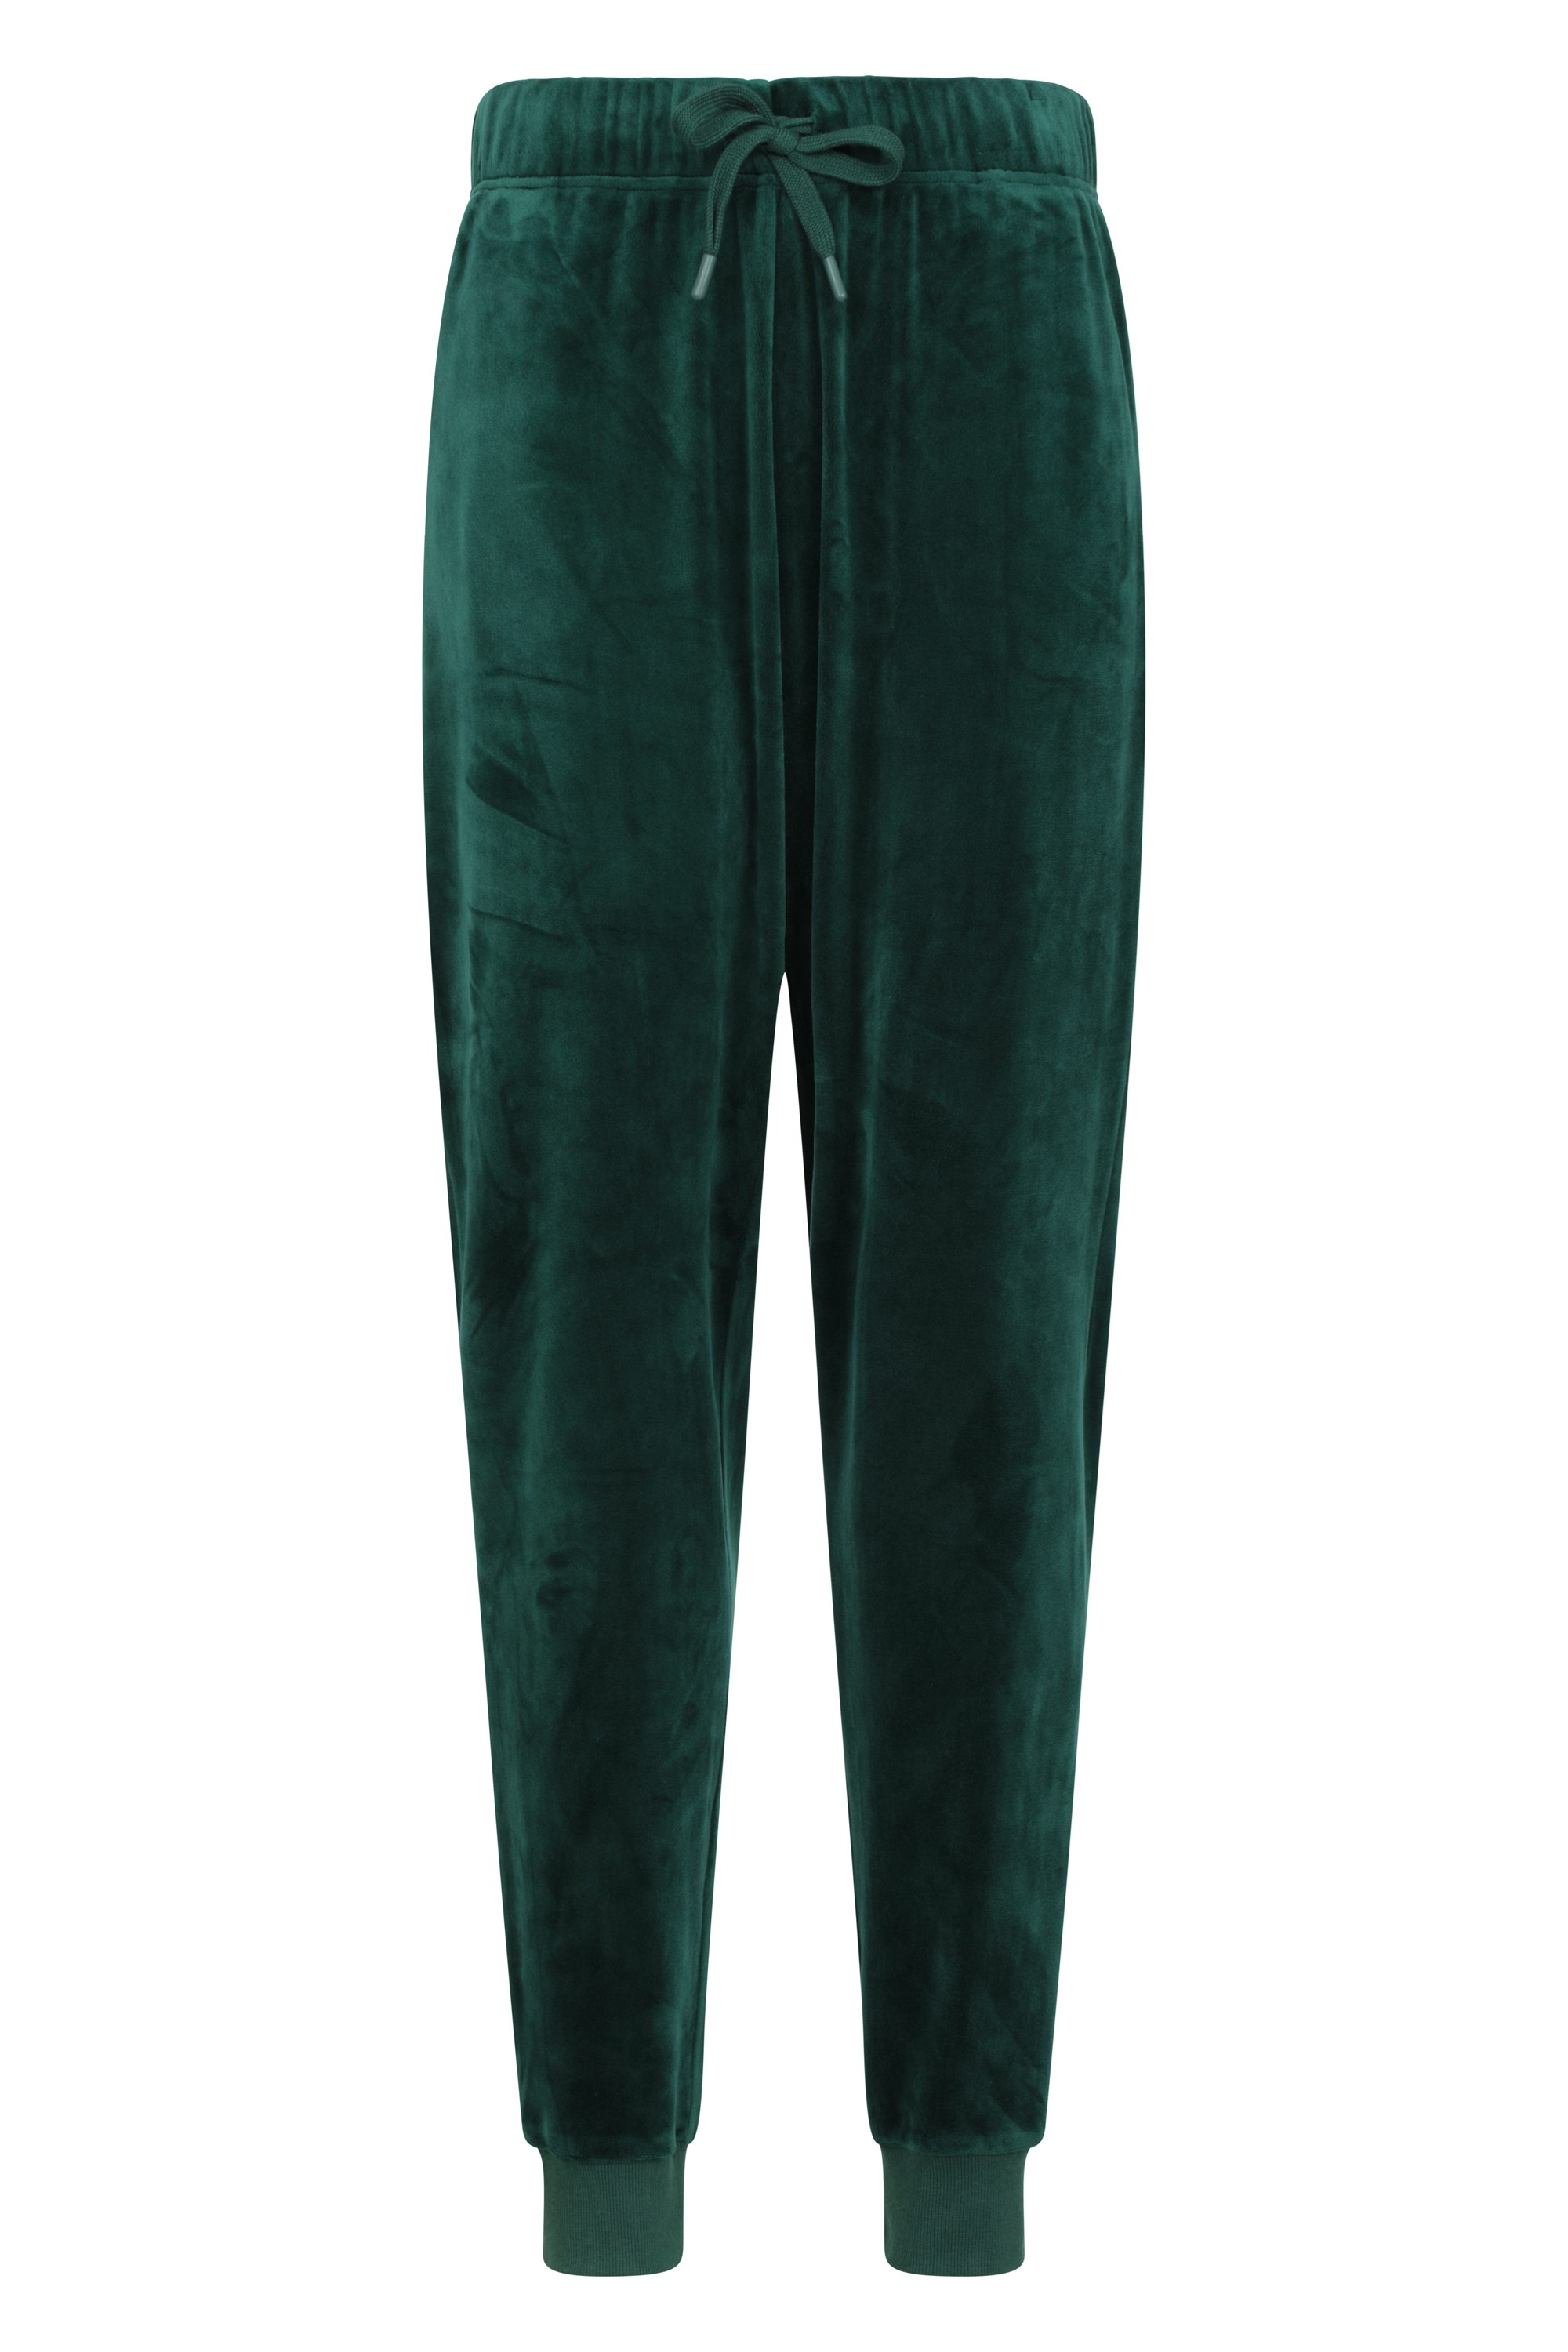 Velvet — damskie spodnie Loungeware - Green